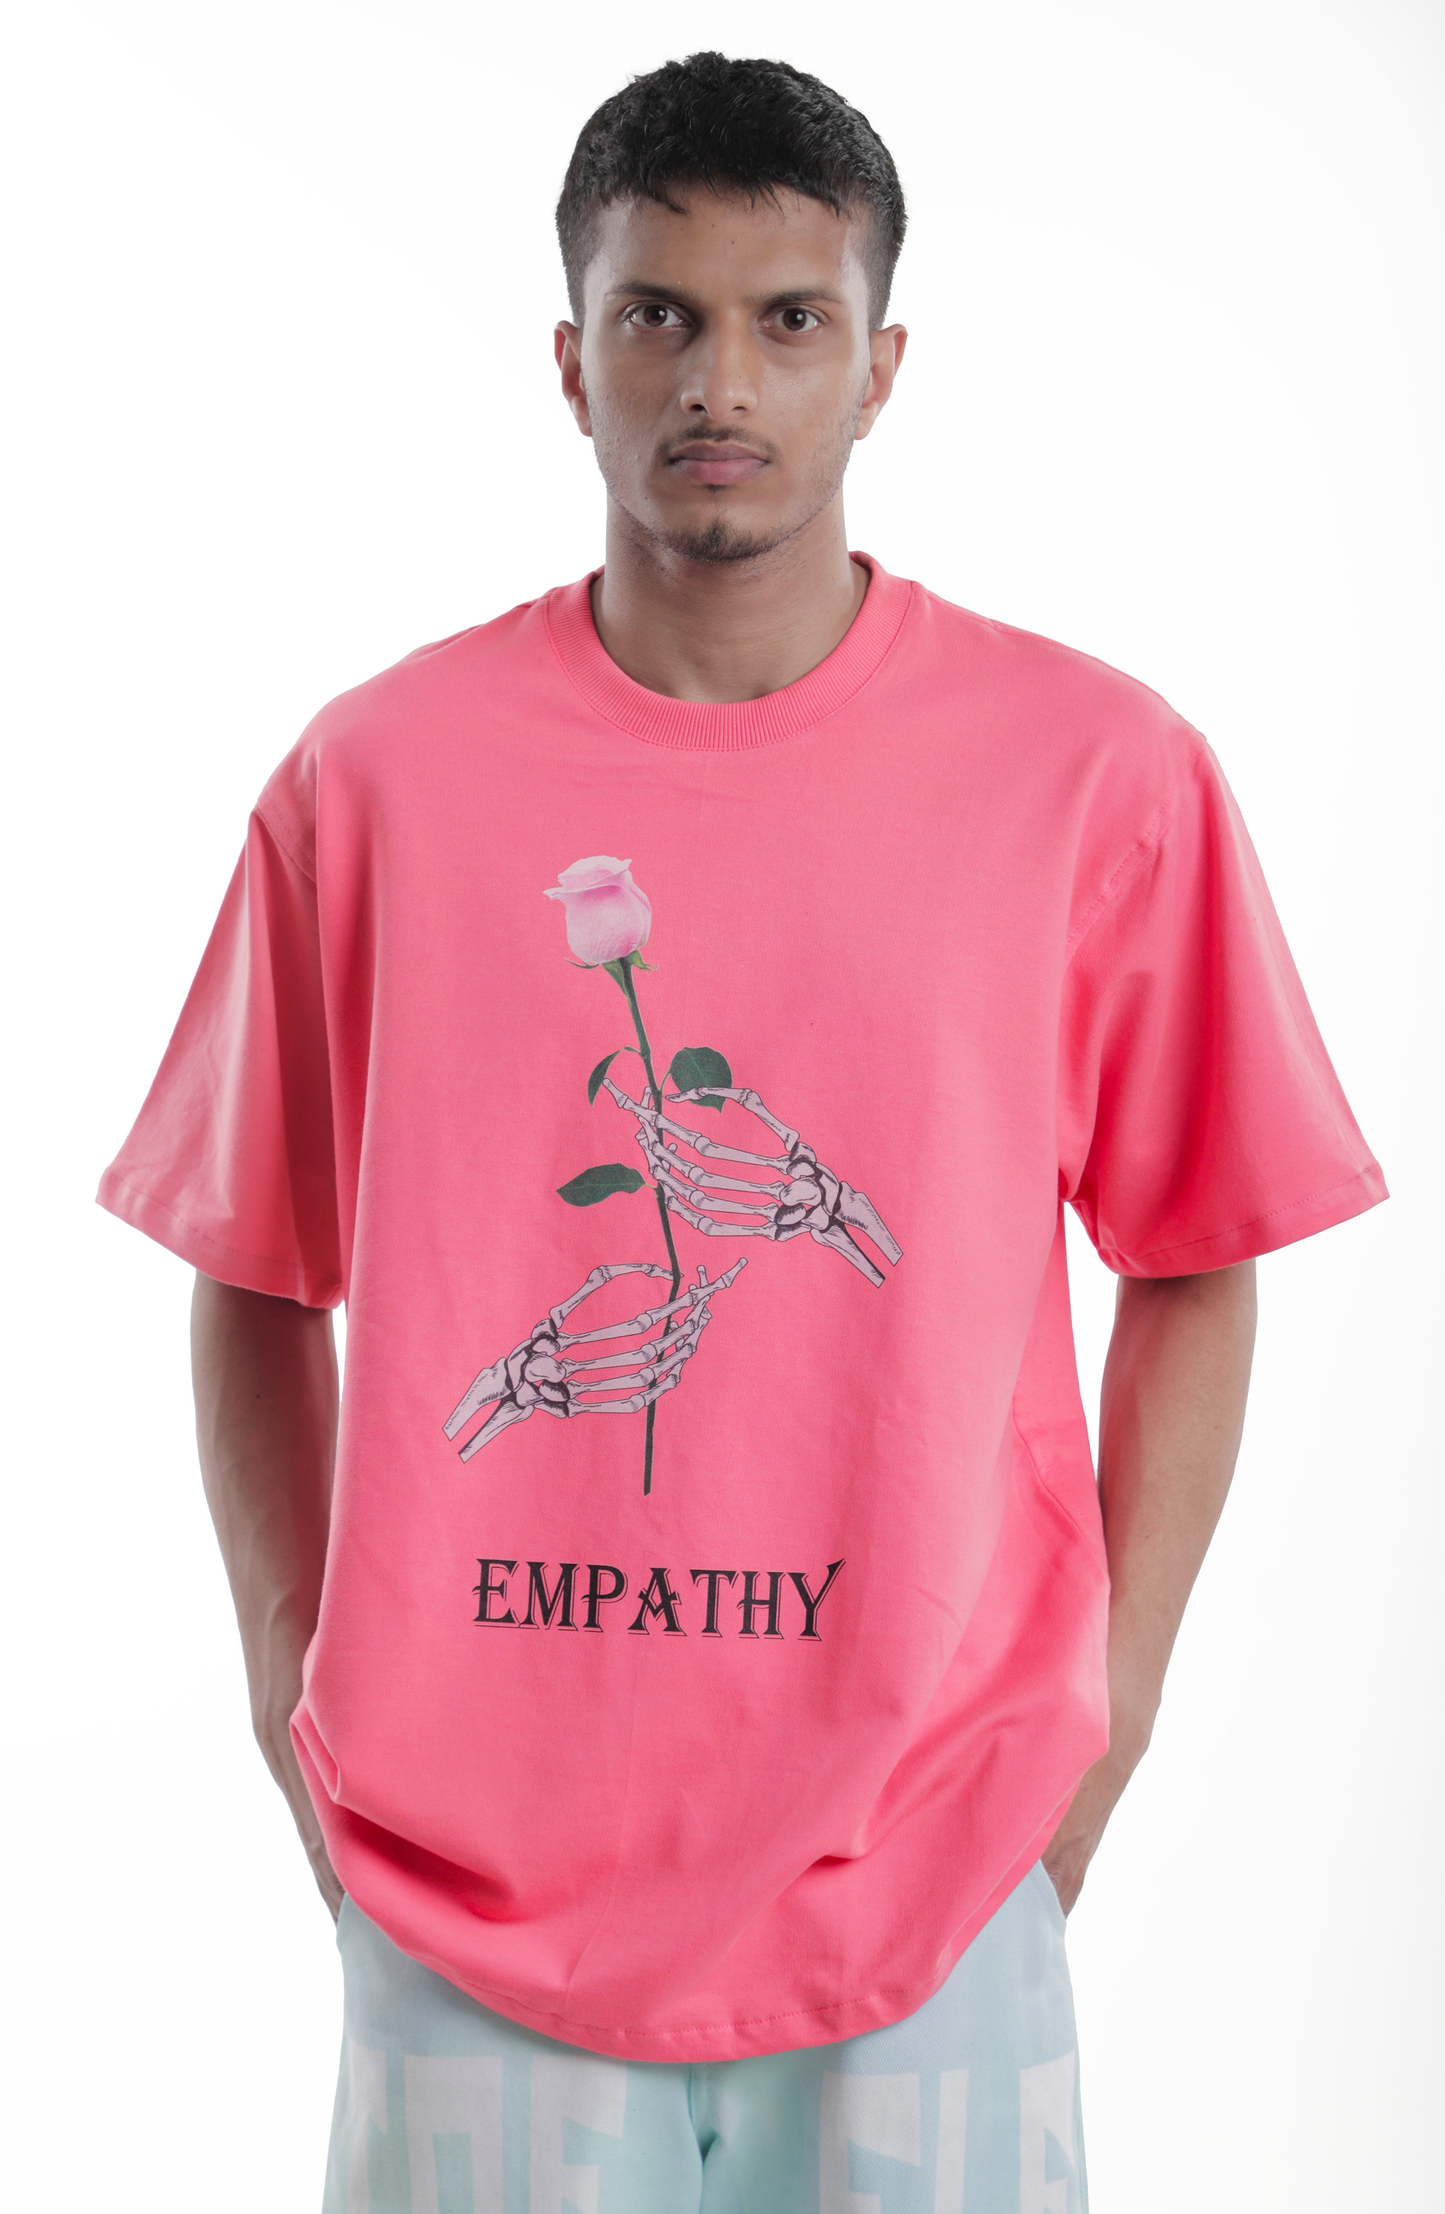 Empathy T-shirt